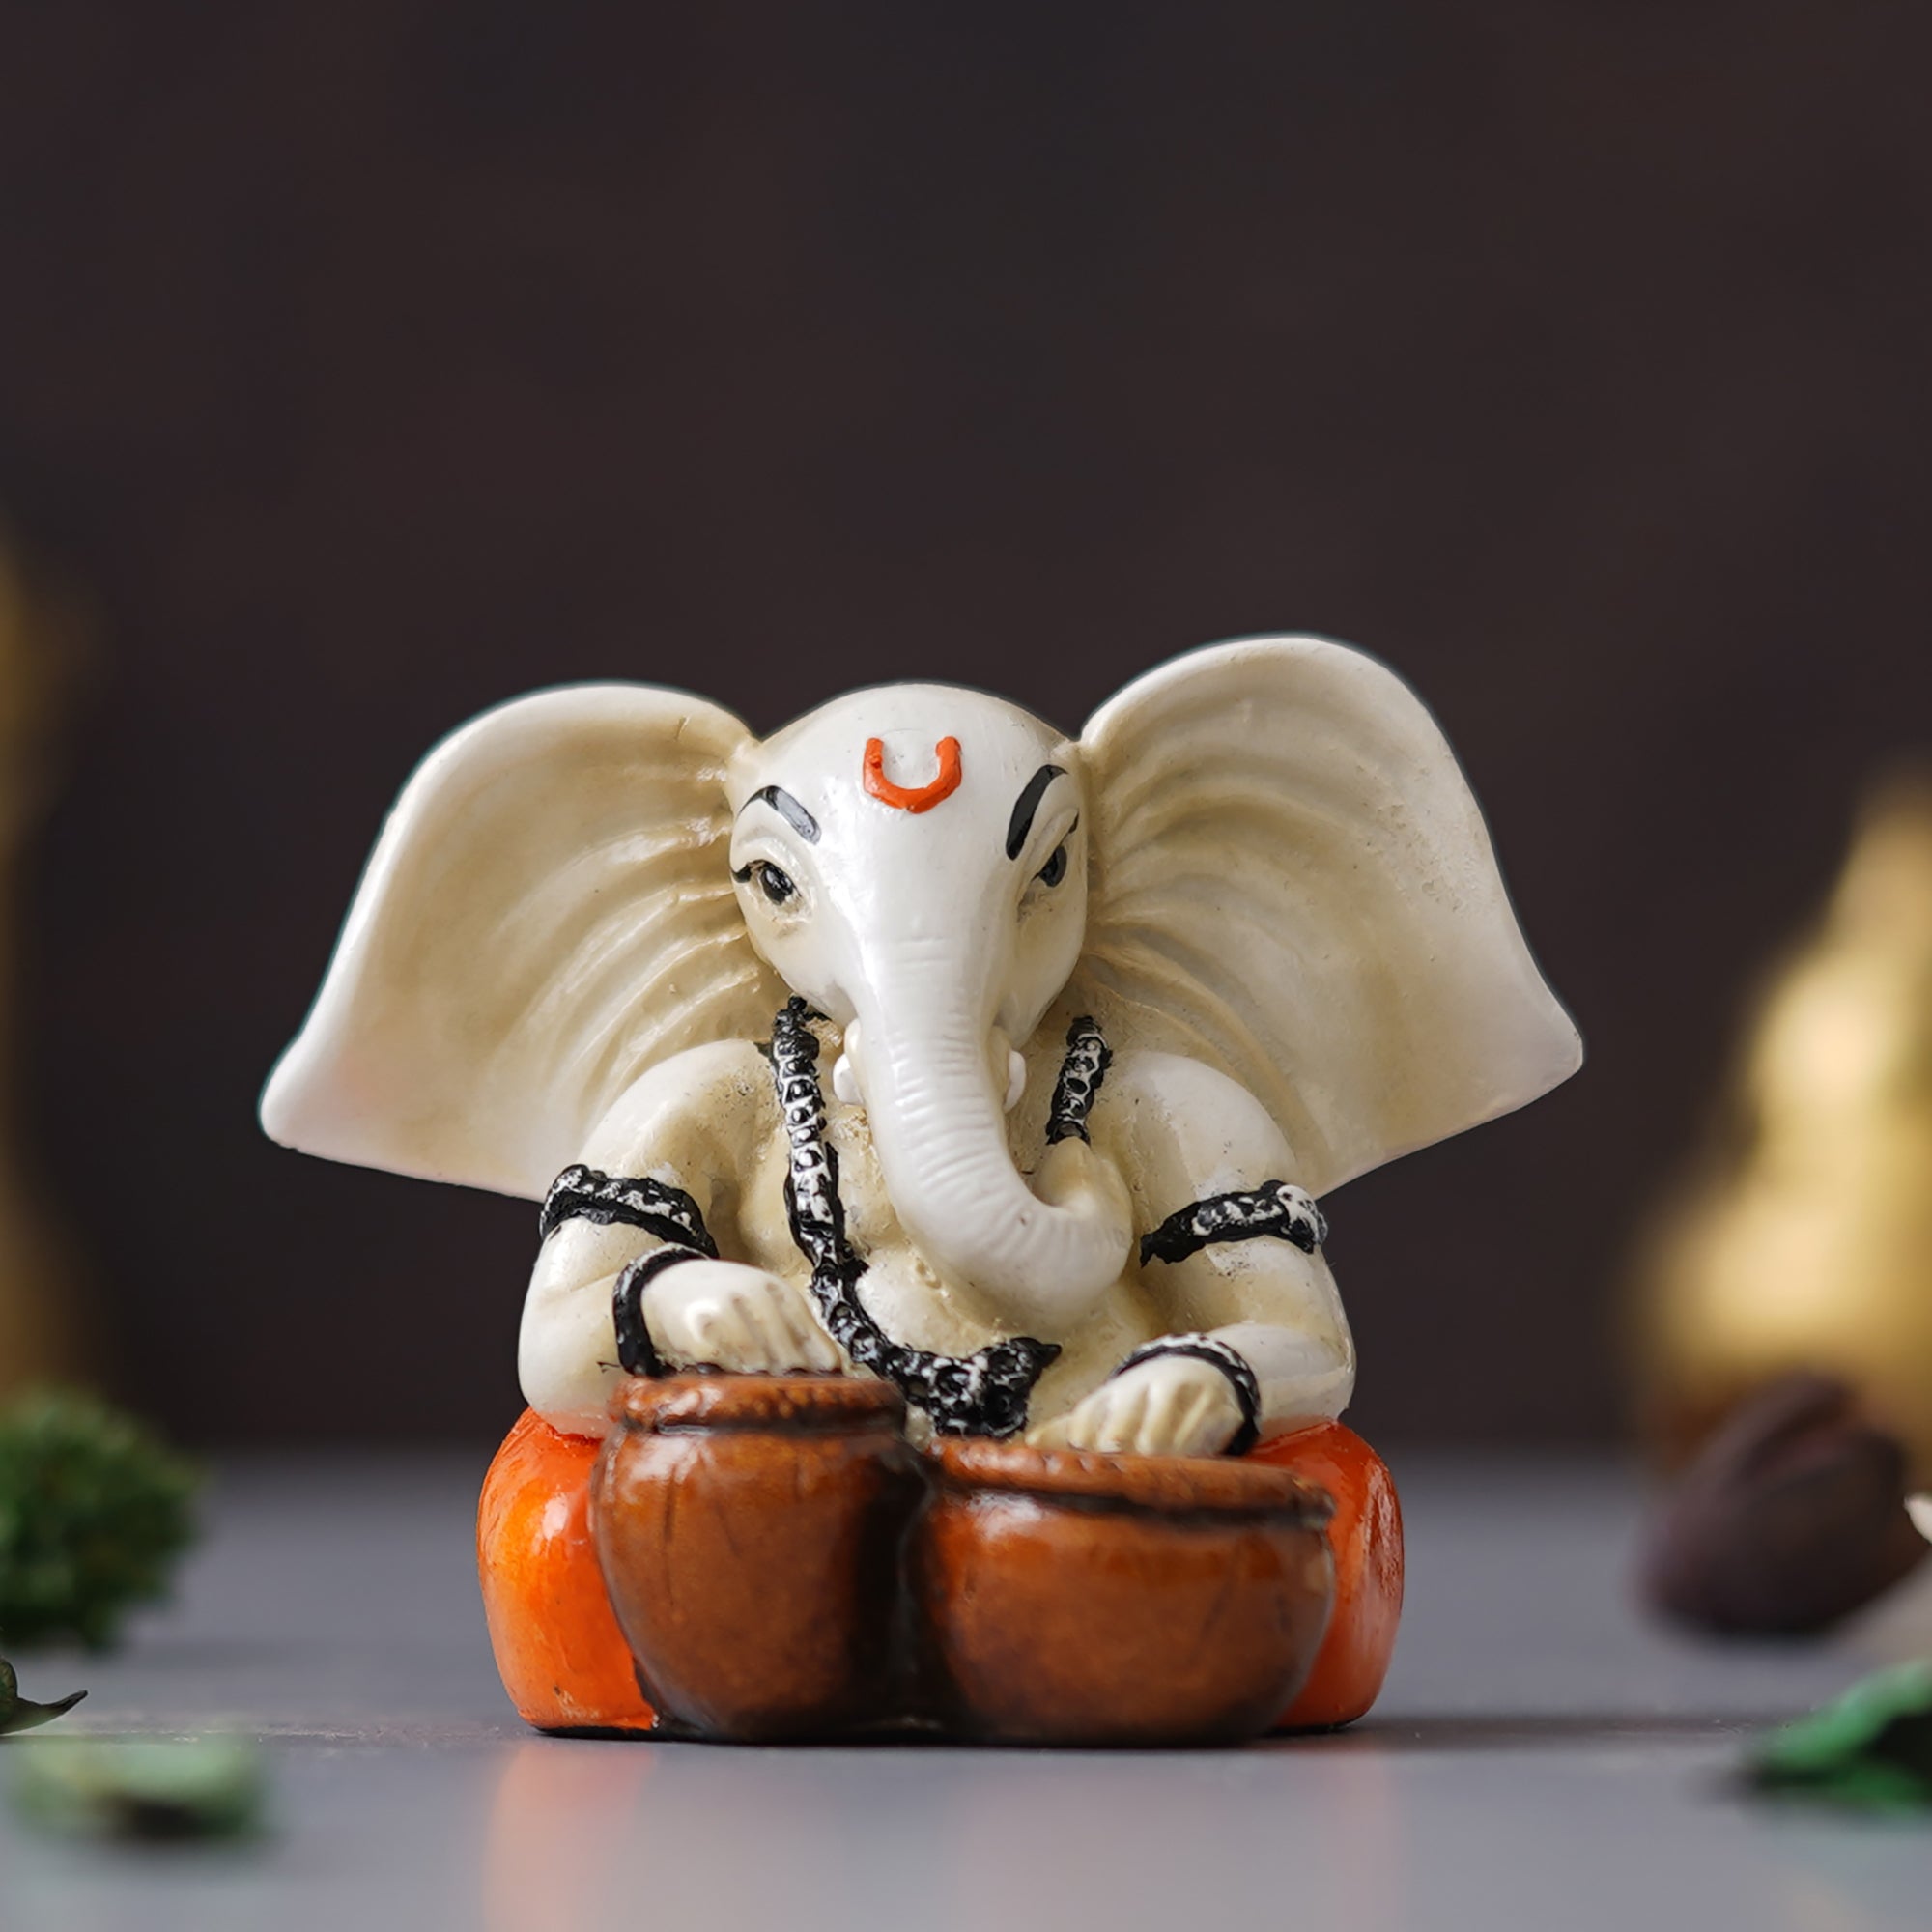 eCraftIndia White & Orange Polyresin Handcrafted Lord Ganesha Idol Playing Tabla Musical Instrument 4